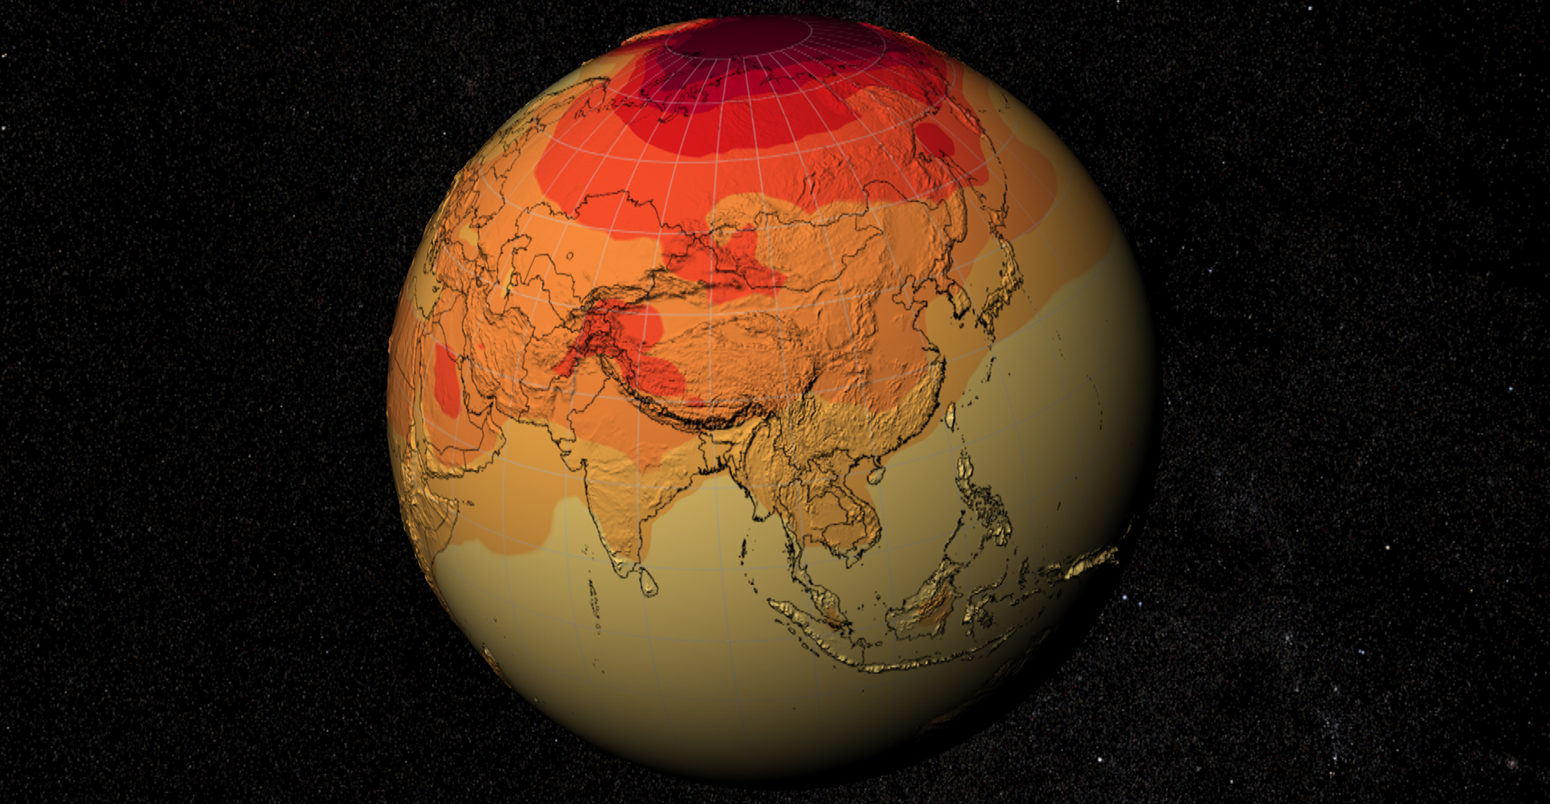 Climate models project 21st century global temperatures. Credit: Alex Kekesi / NASA's Scientific Visualization Studio